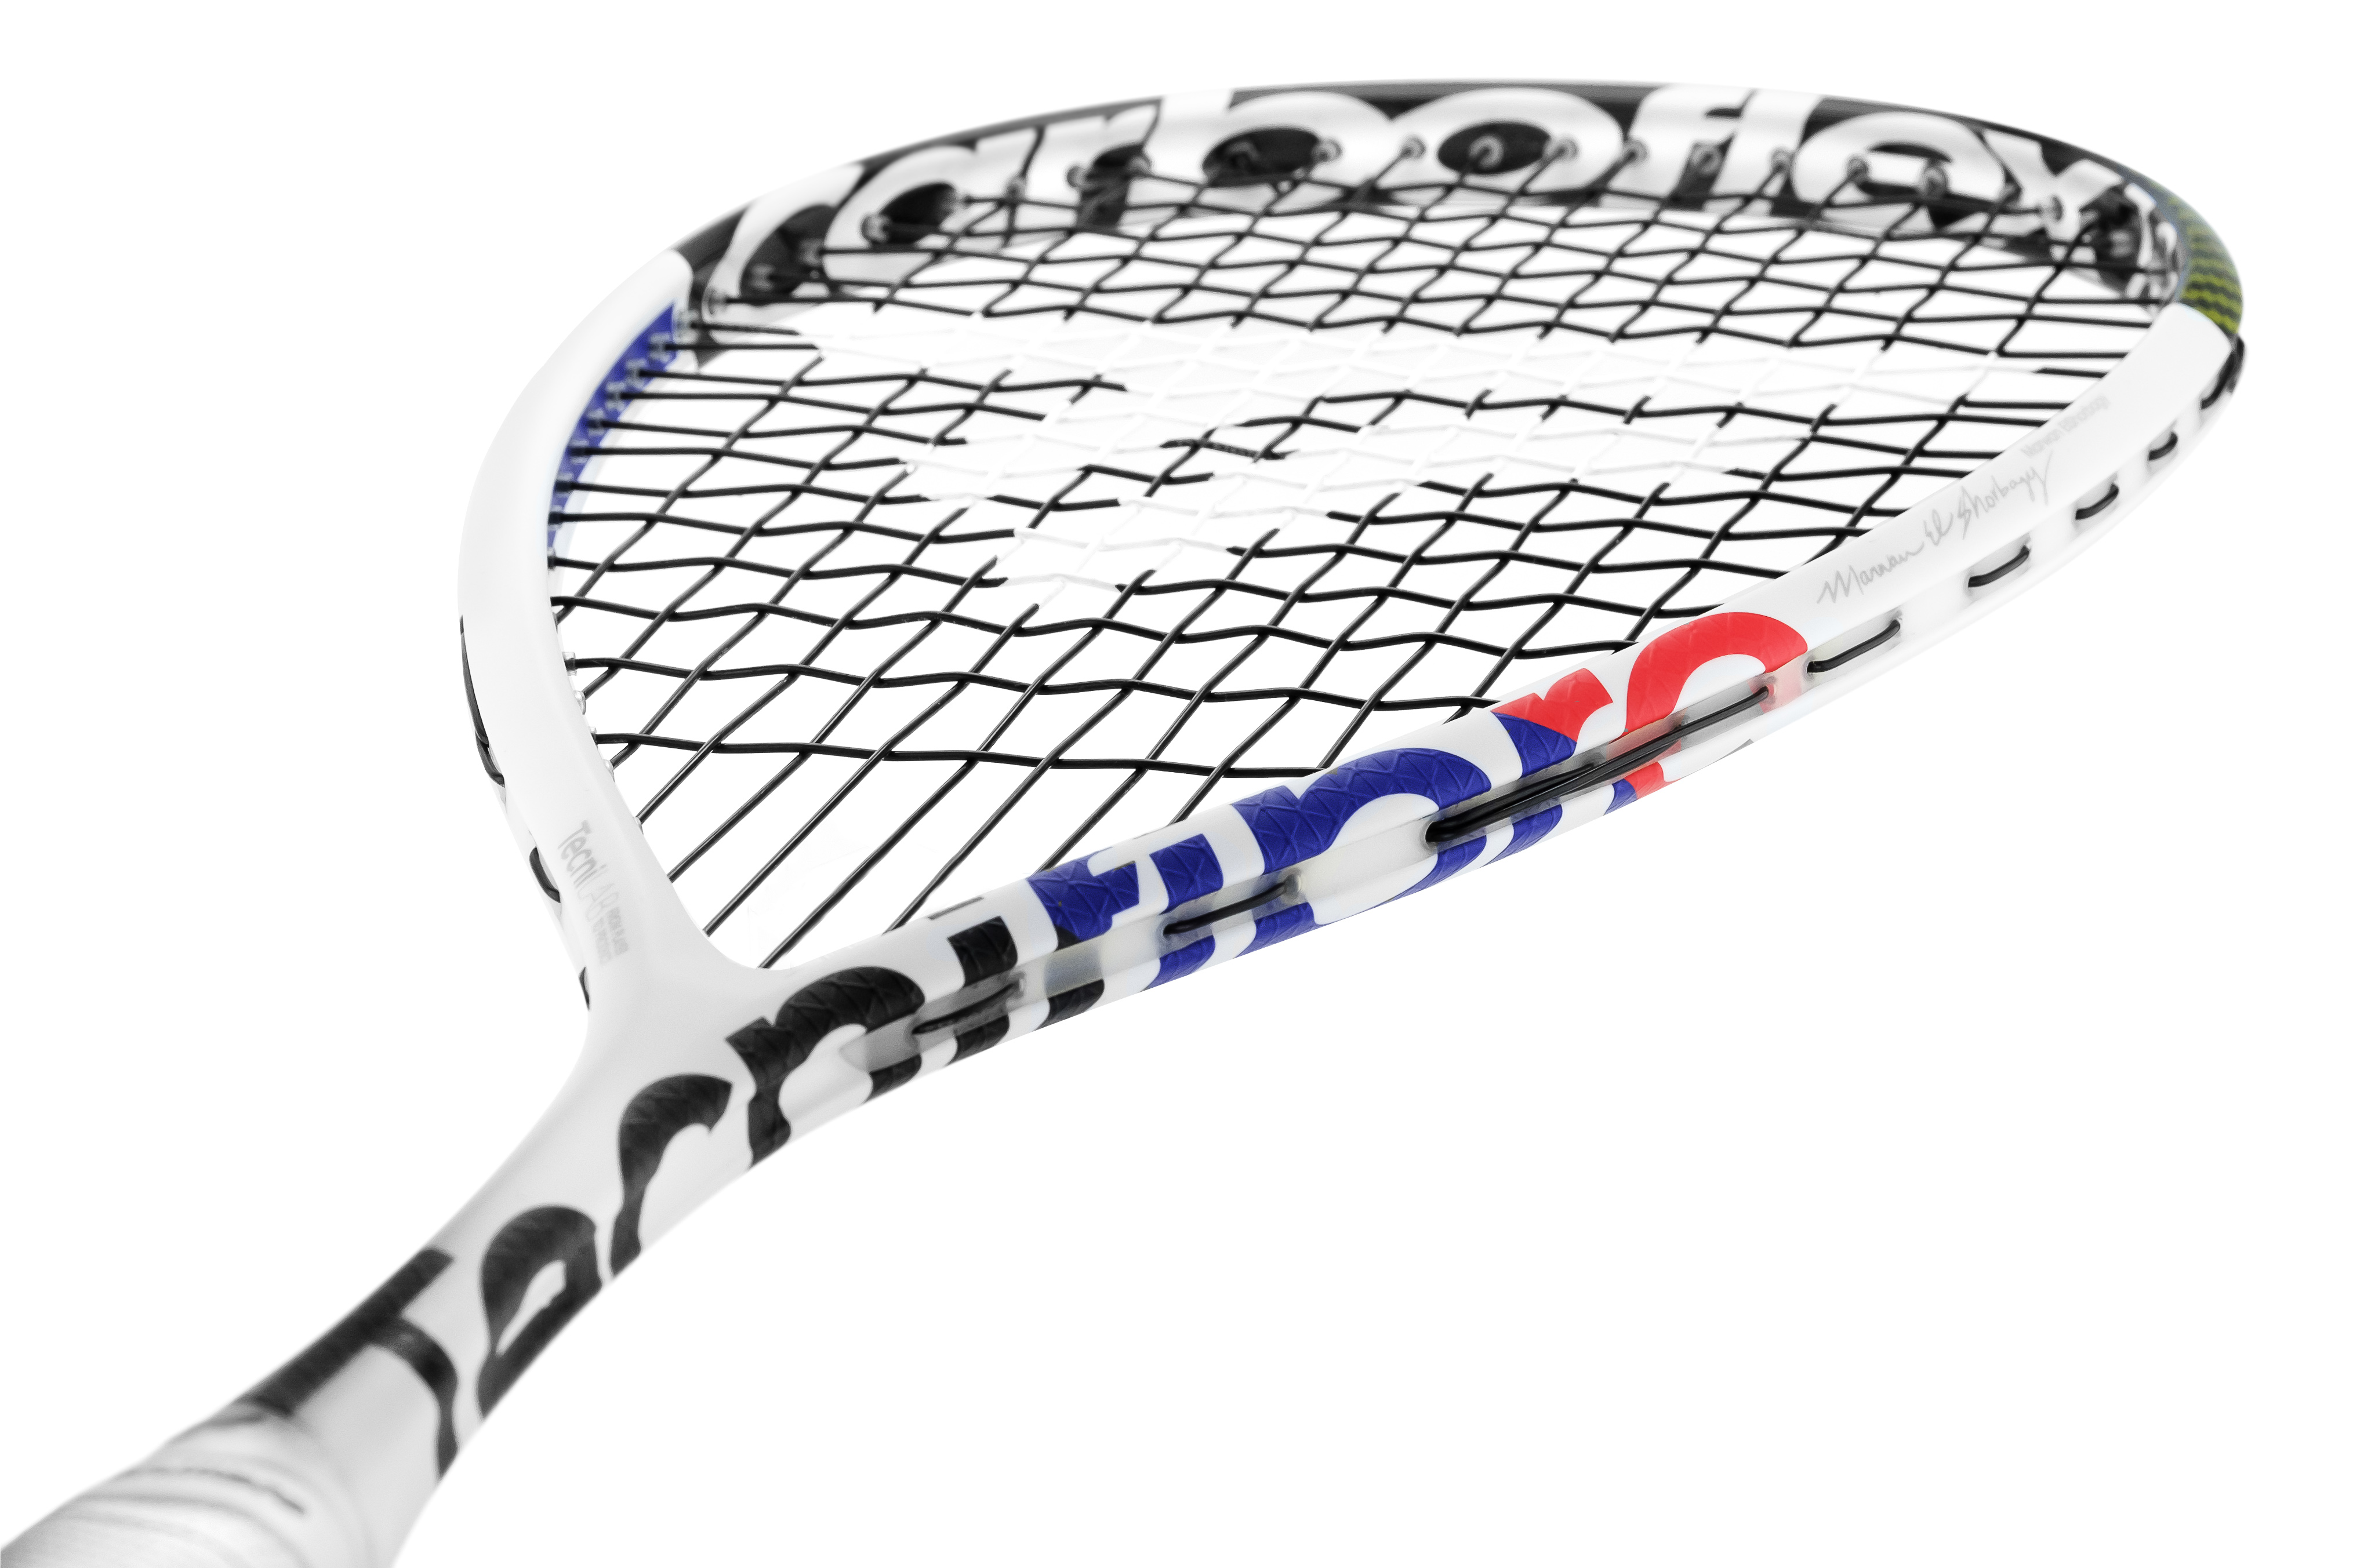 CARBOFEX 130 X-TOP Squash Racket Tecnifibre スカッシュラケット-